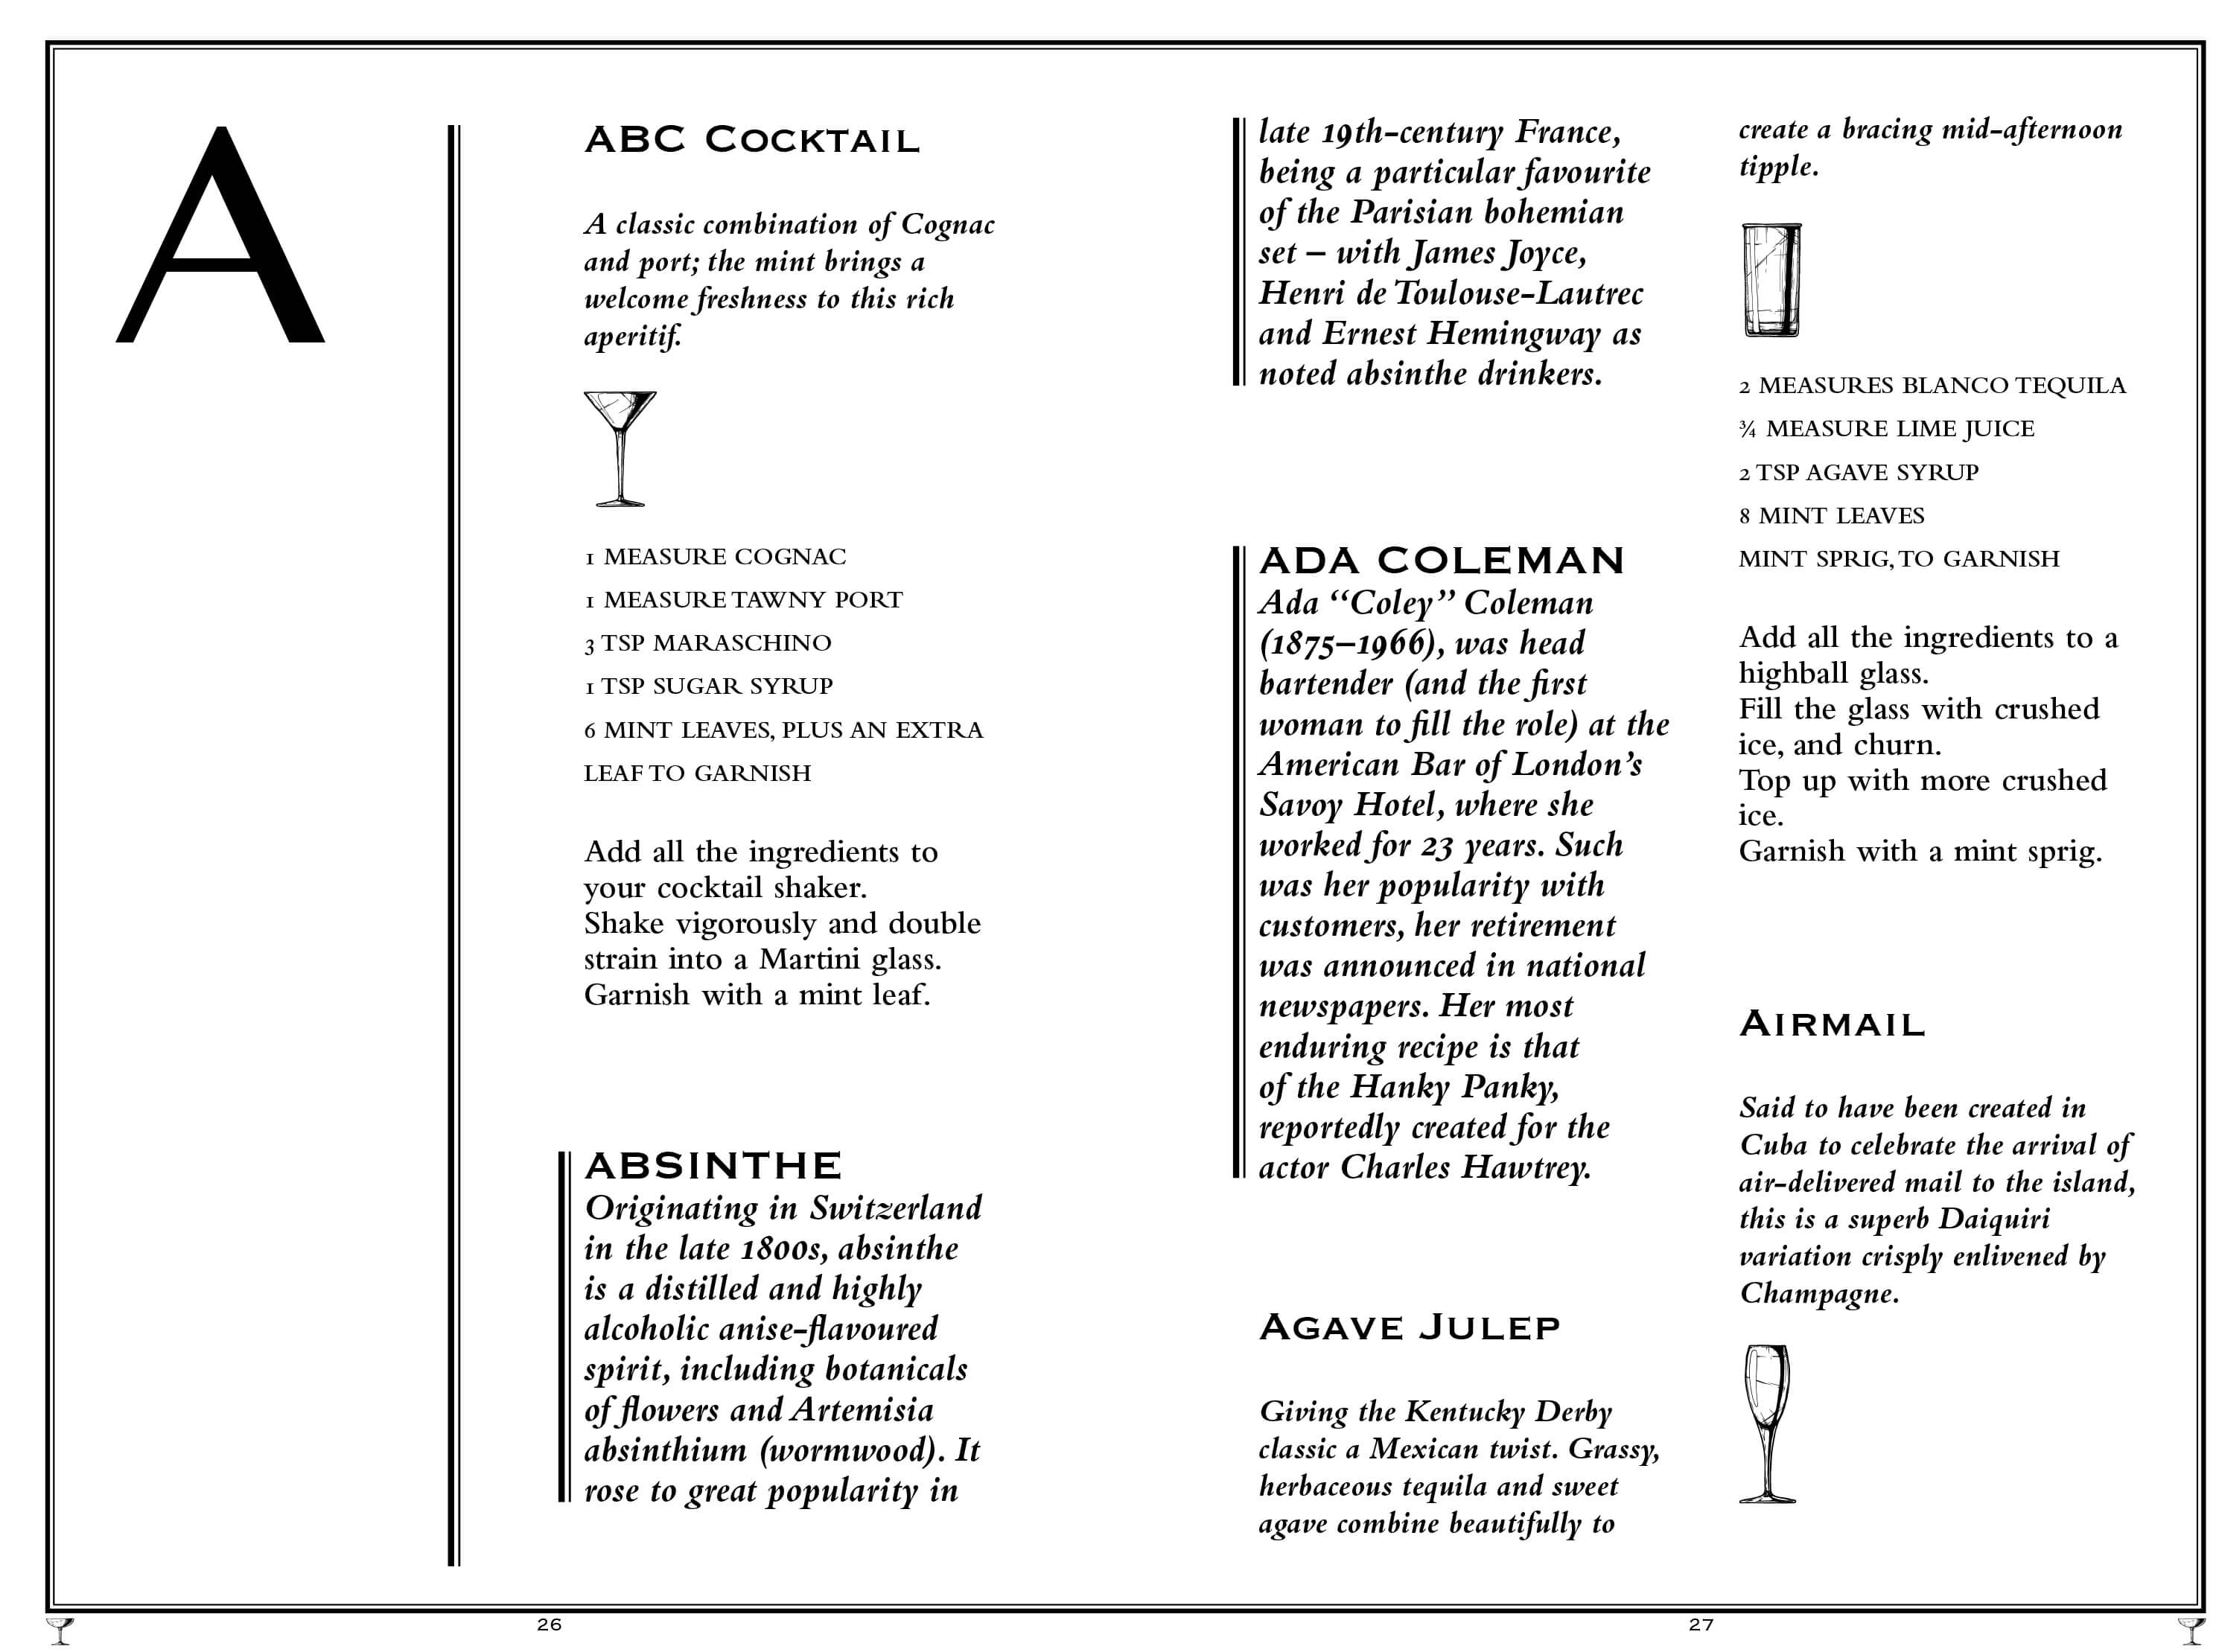 Cocktail Bible | Illustrated Recipe Book - Lifestory - Bookspeed